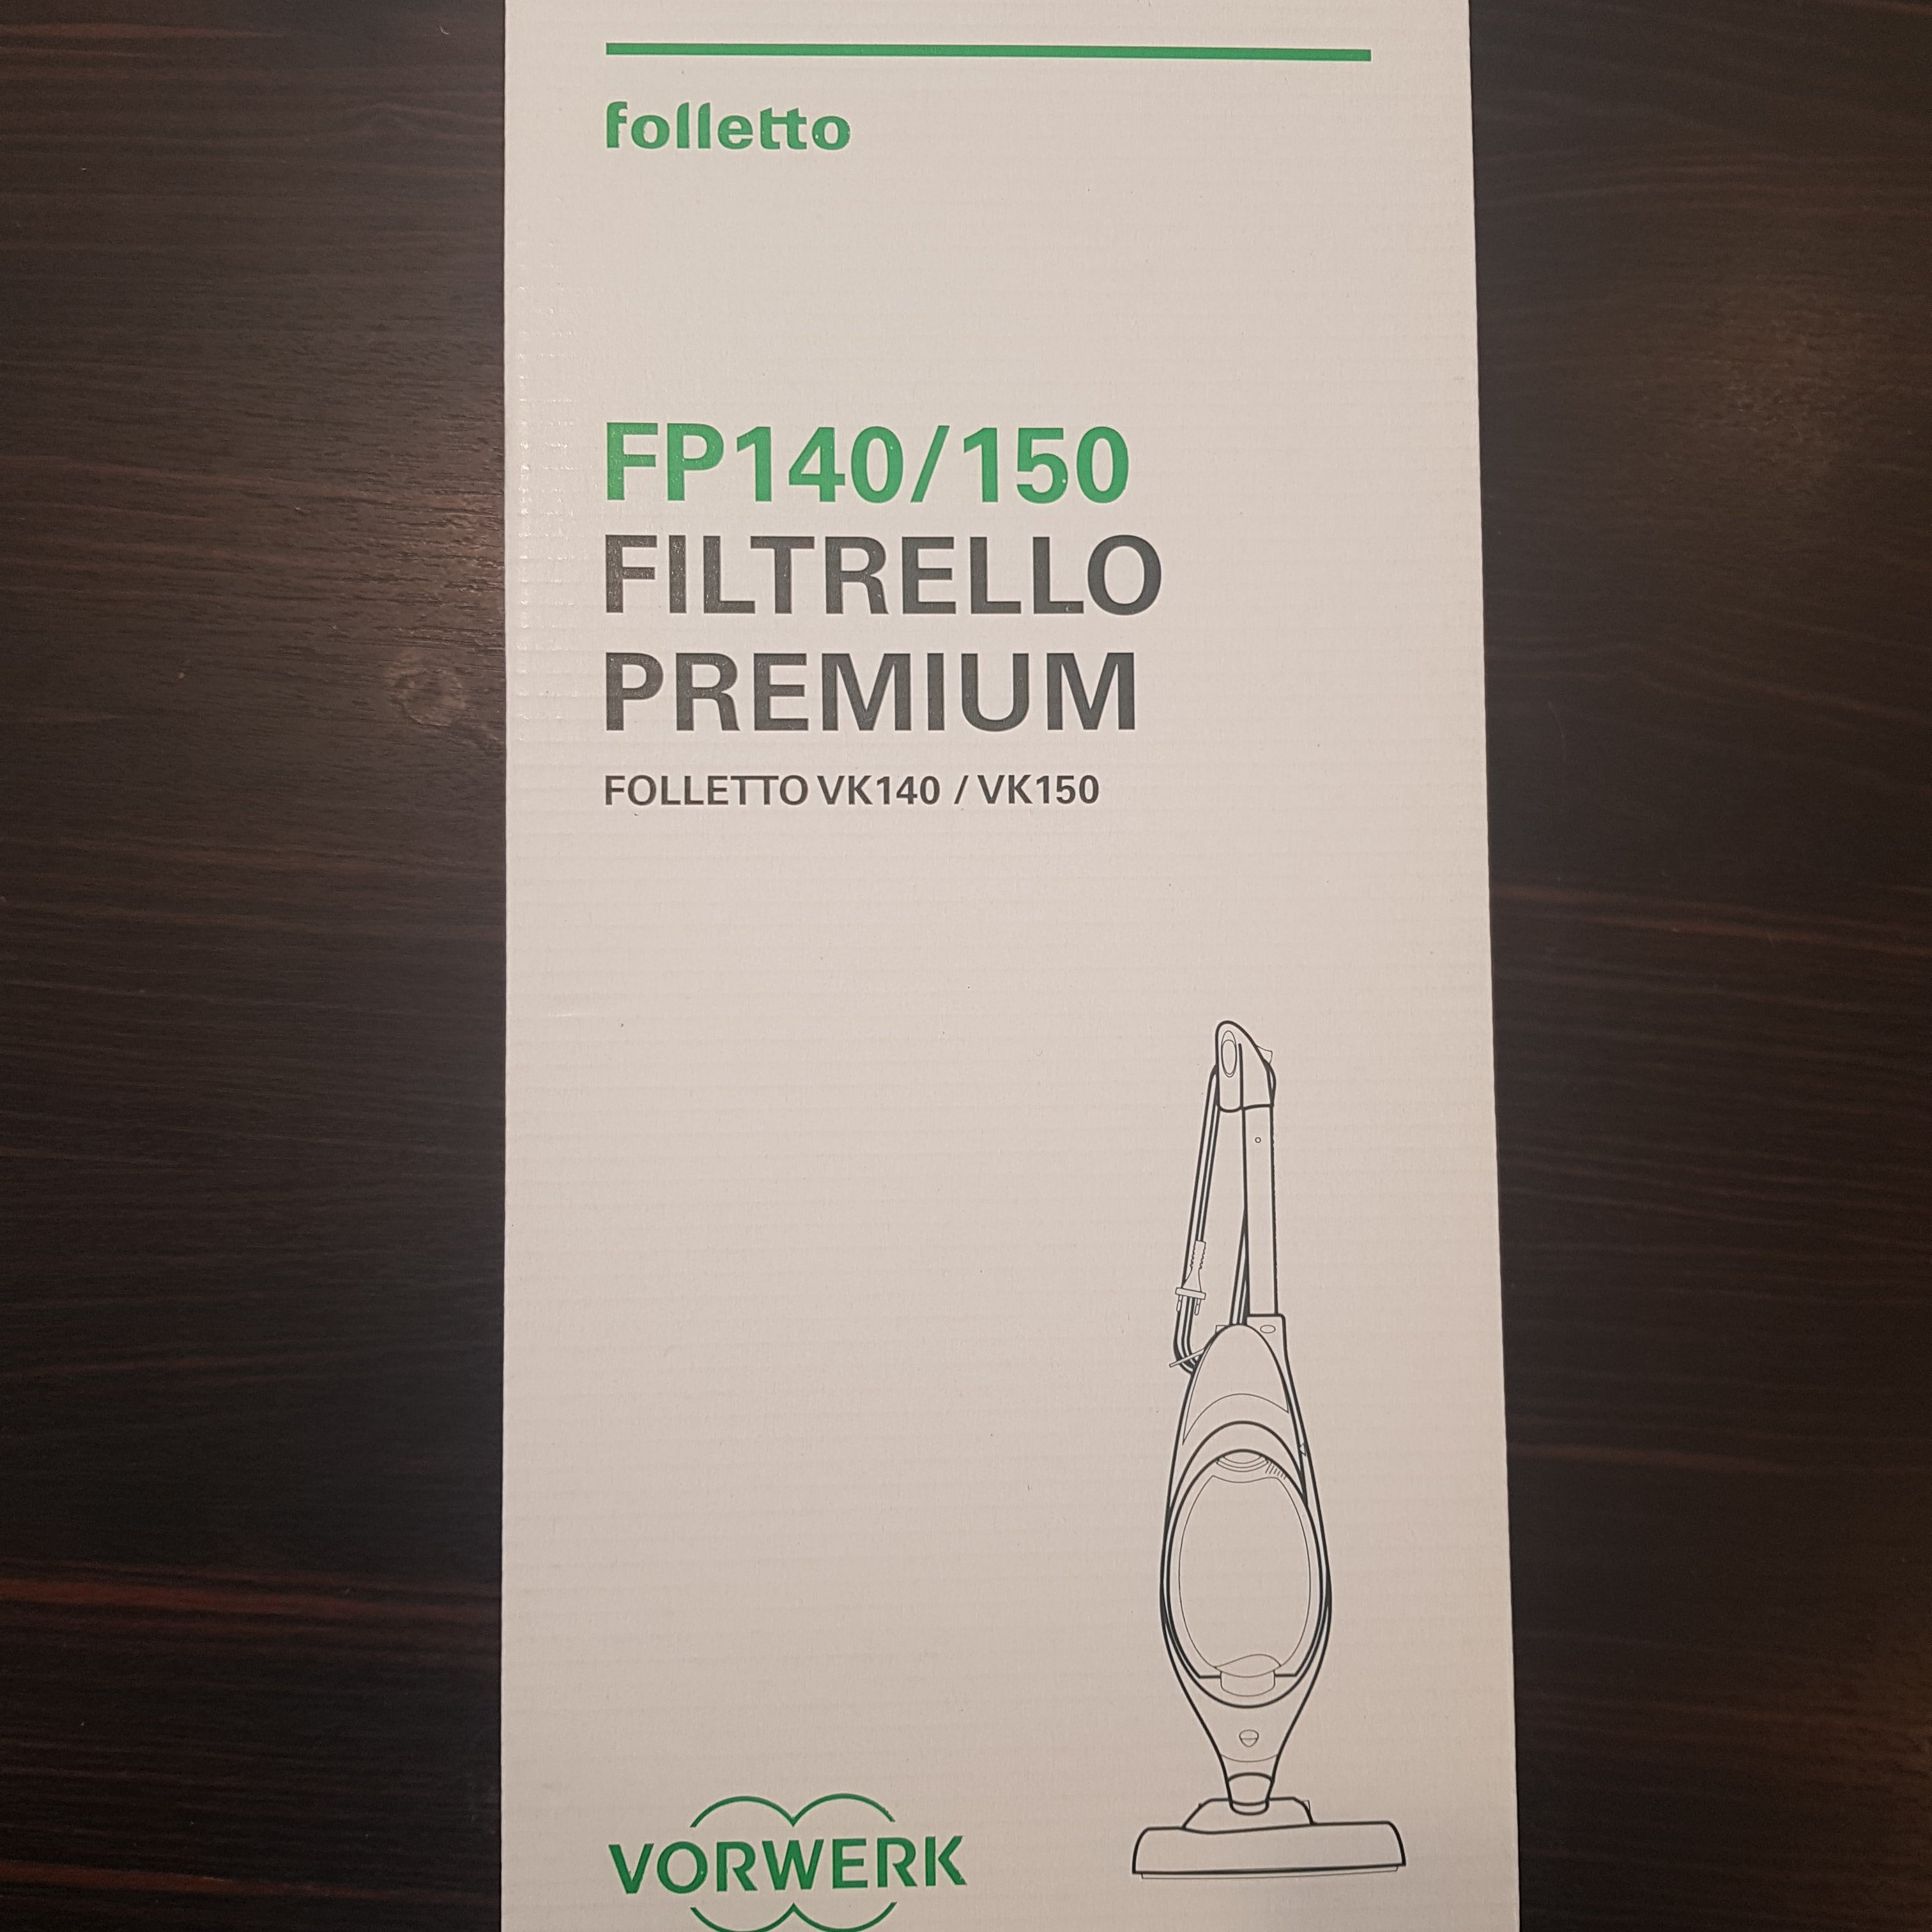 Confezione 6 sacchetti filtrello premium fp140 per vk140/vk150 Vorwerk Folletto VORWERK FOLLETTO